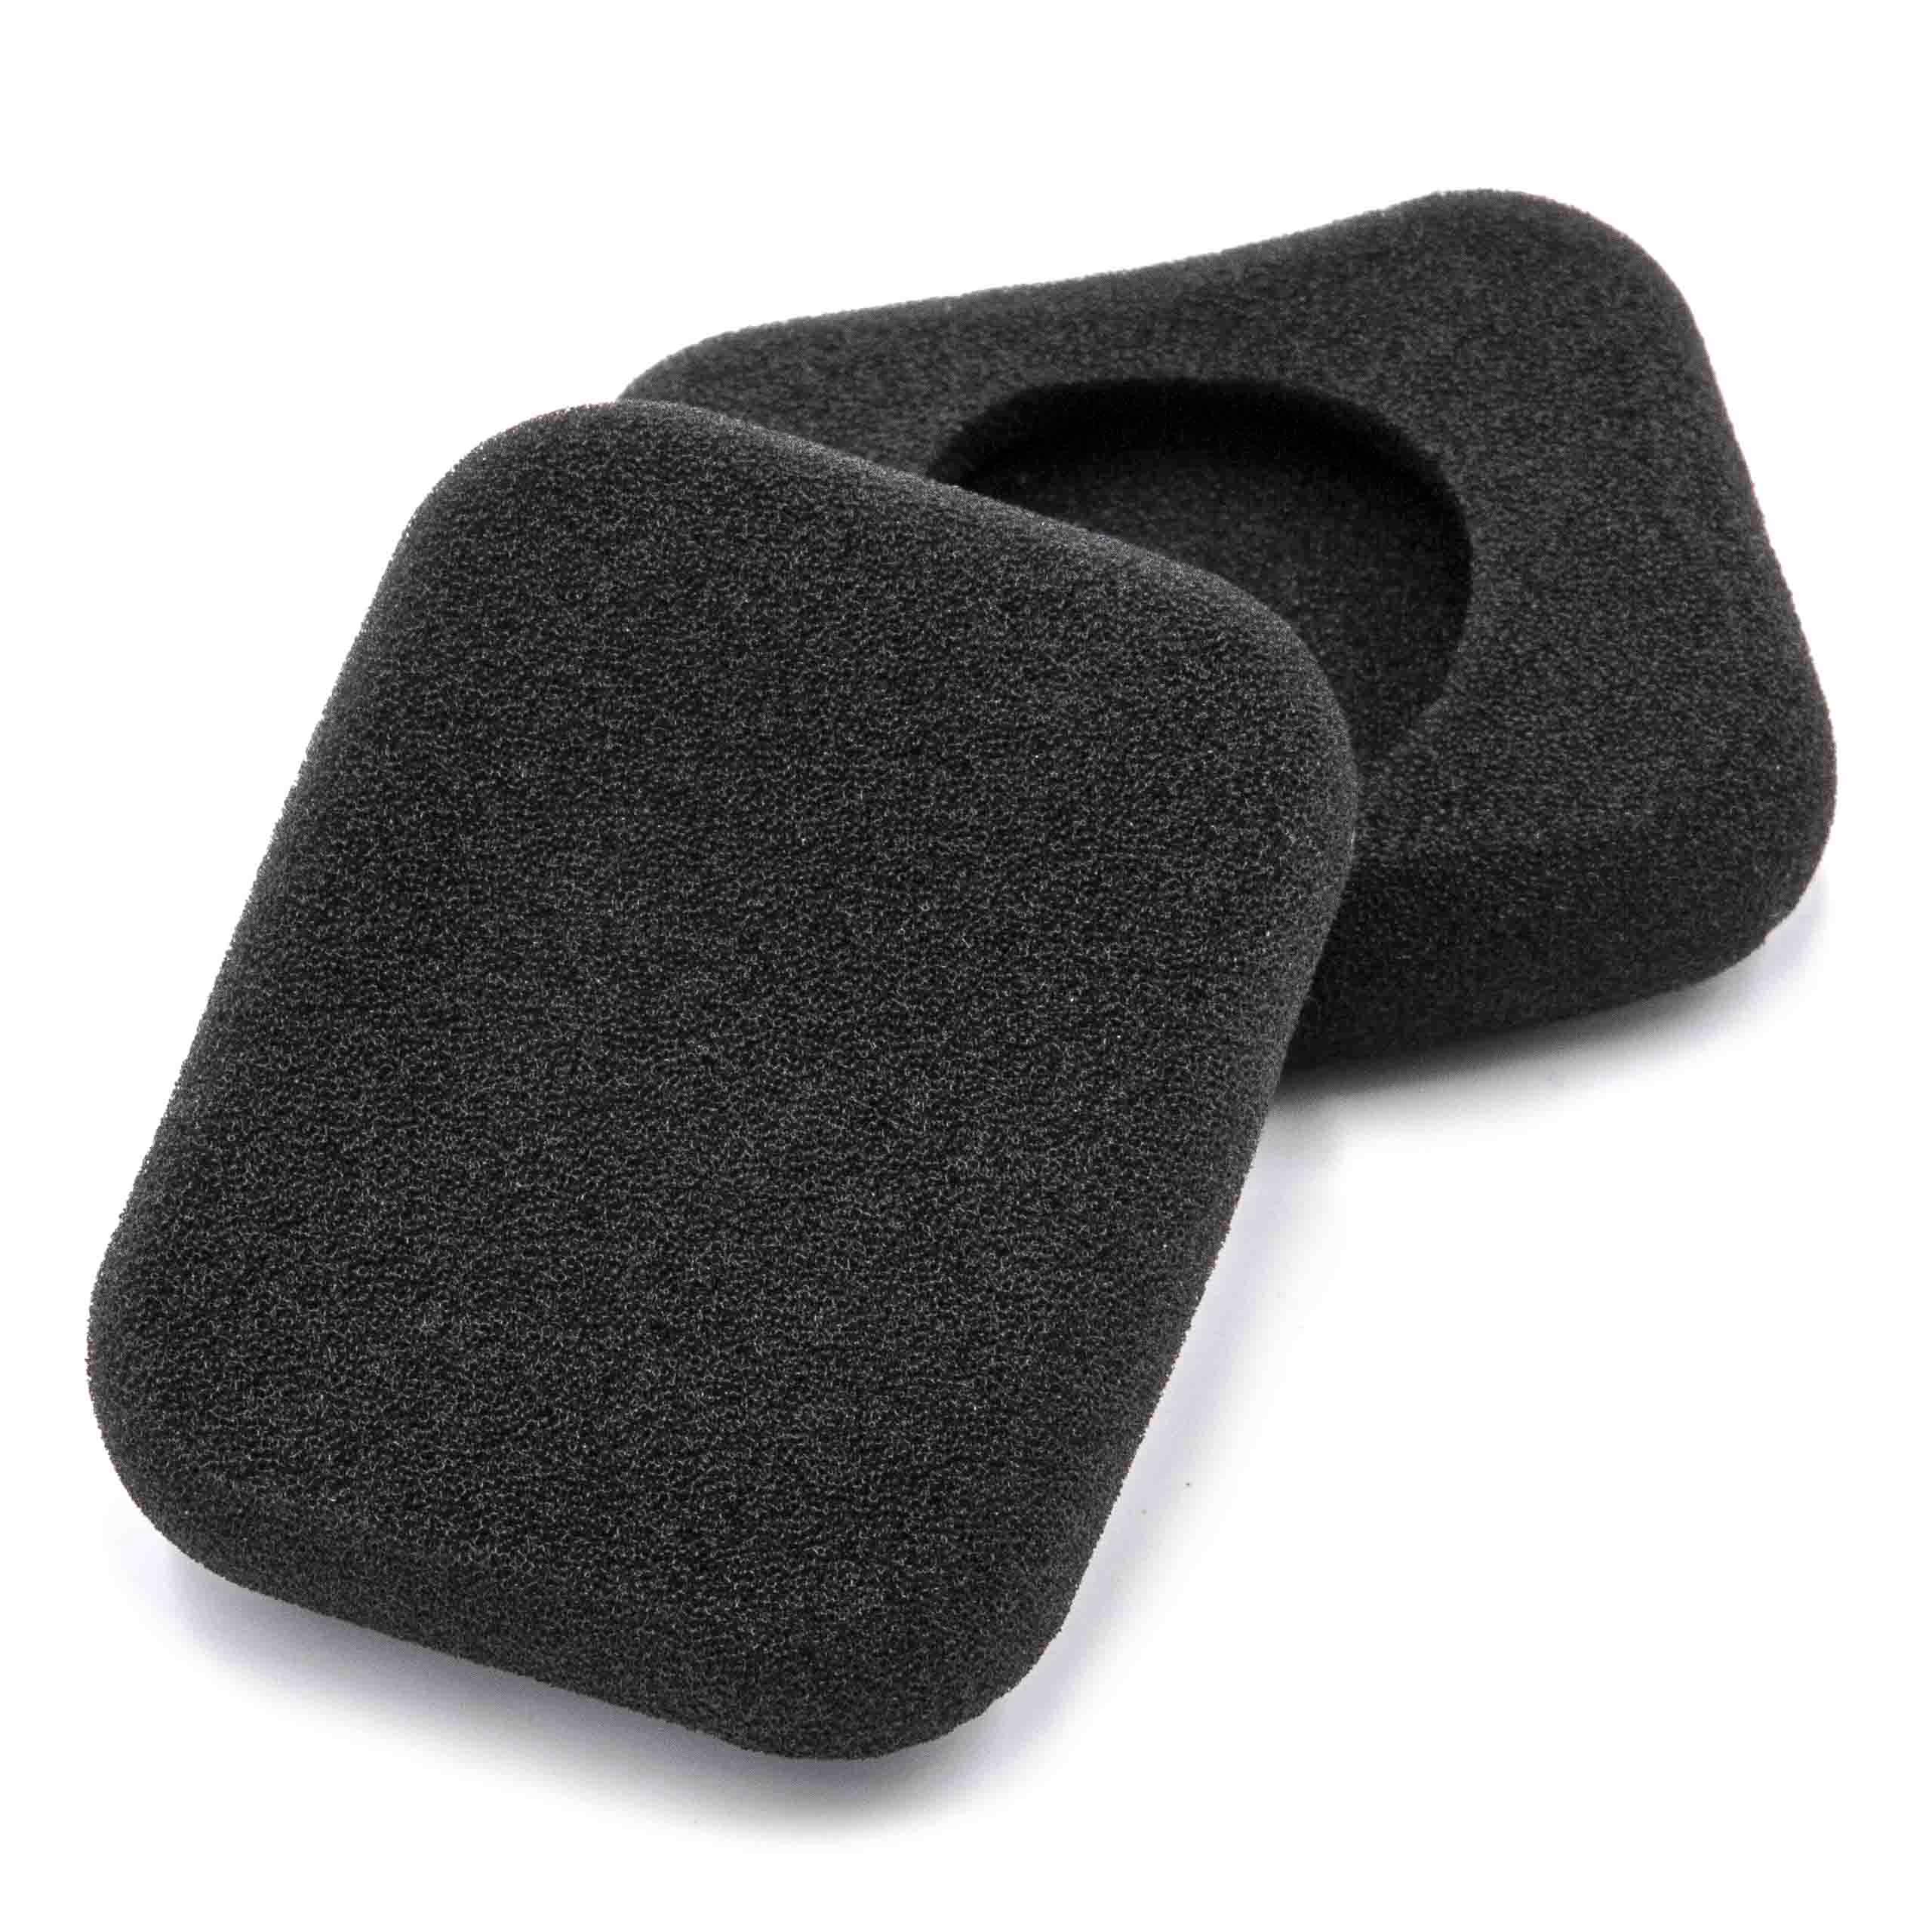 2x 1 paio di cuscinetti per Bang & Olufsen Form cuffie ecc. - gommapiuma, di alta qualità, nero